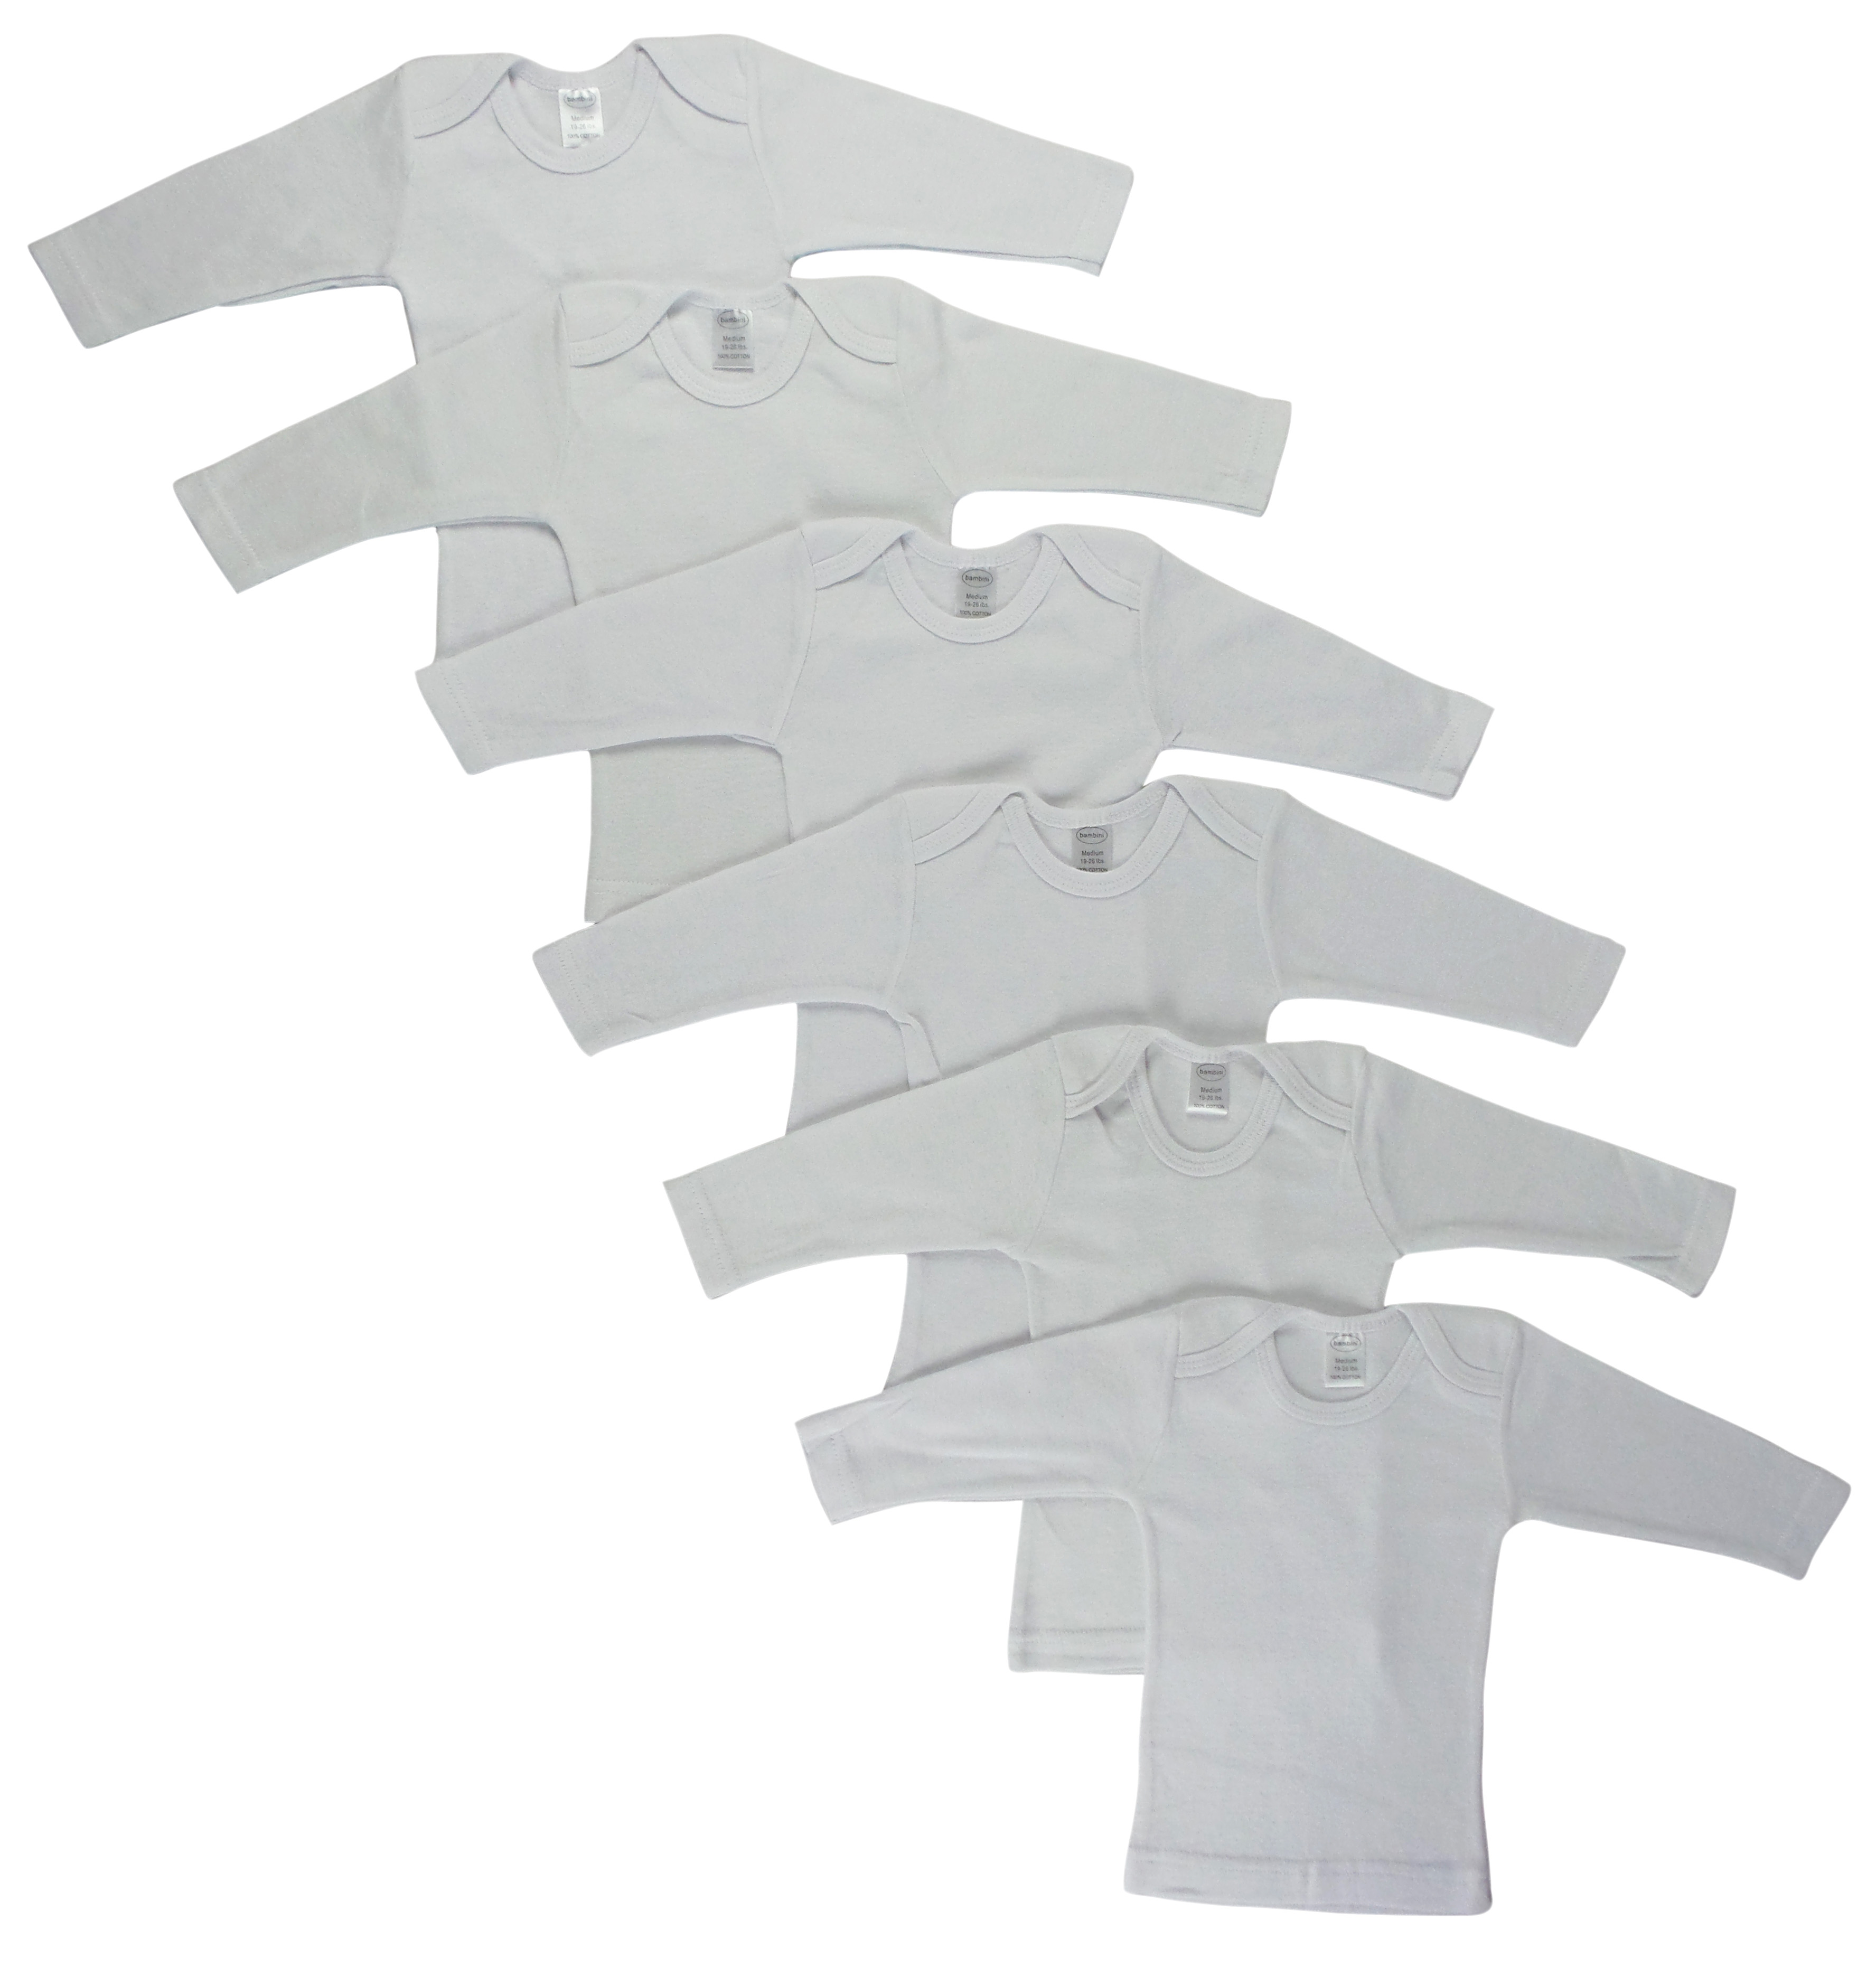 Bambini White Long Sleeve Lap T-shirts  6 Pack - Large